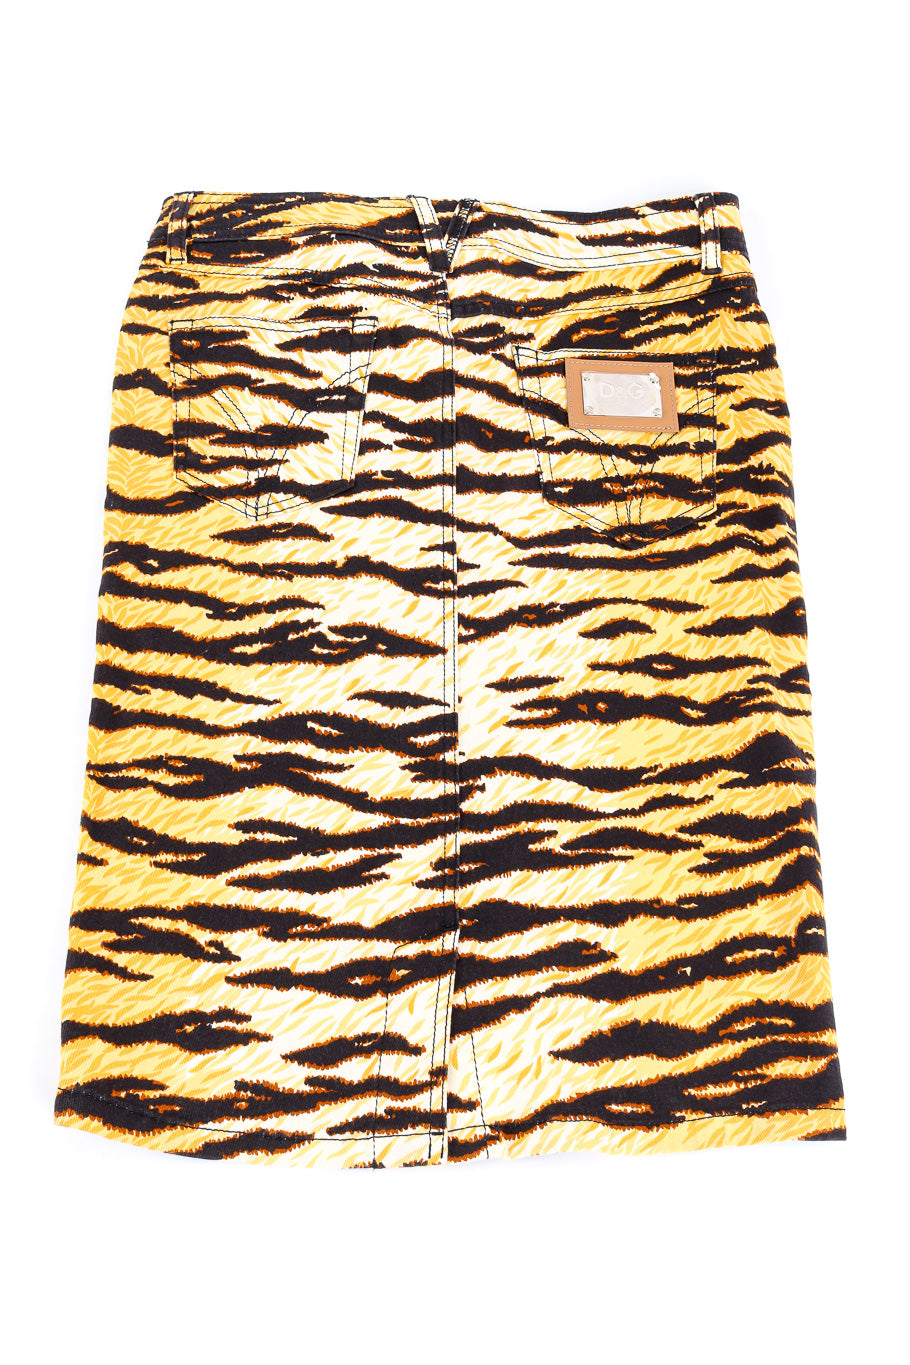 Dolce & Gabbana cotton animal skirt back side flat-lay @recessla